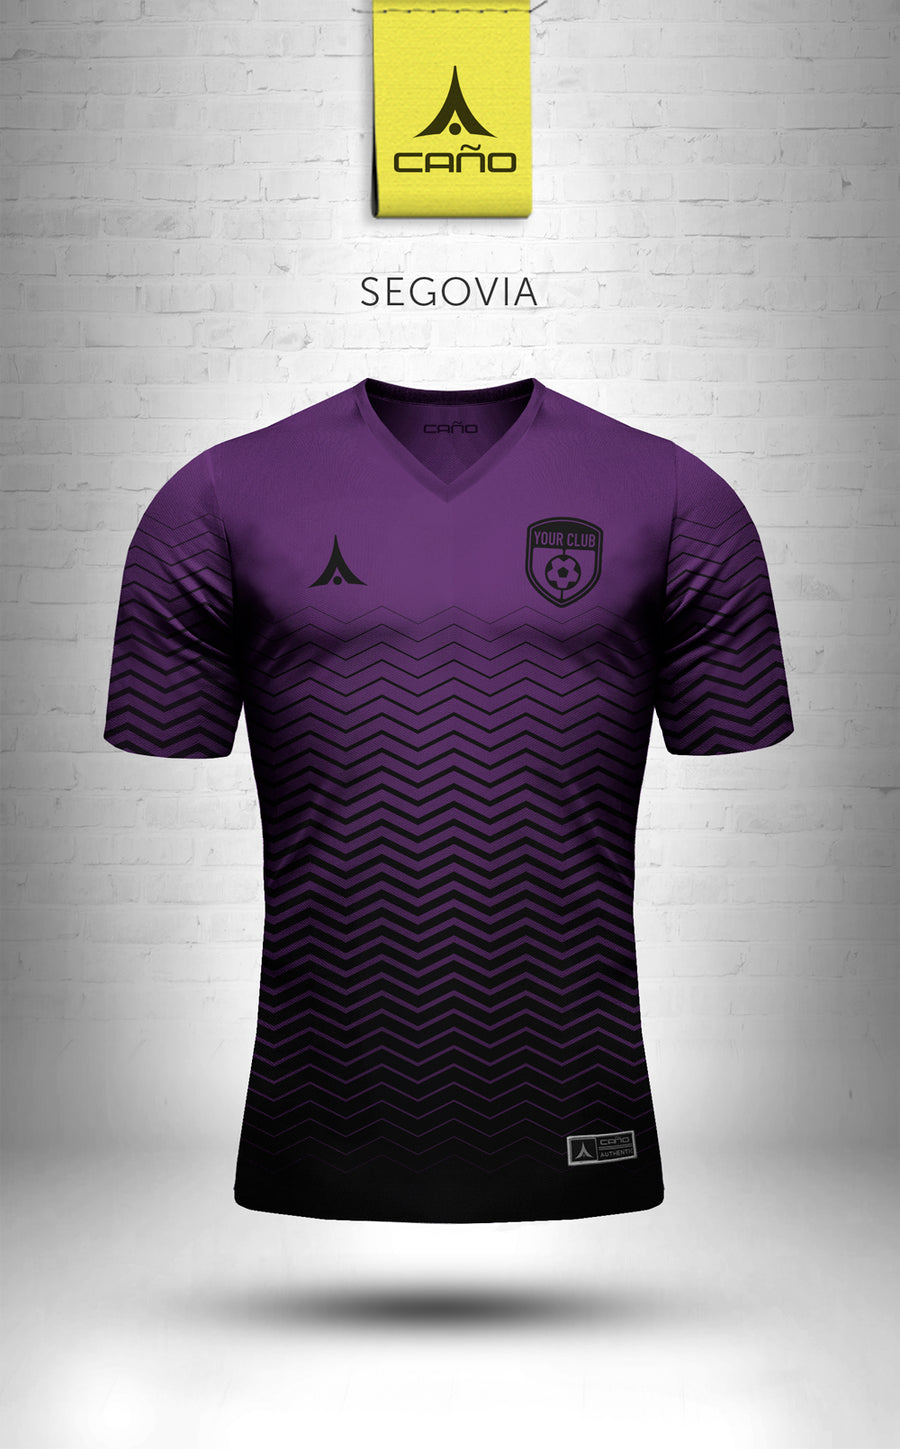 Segovia in purple/black